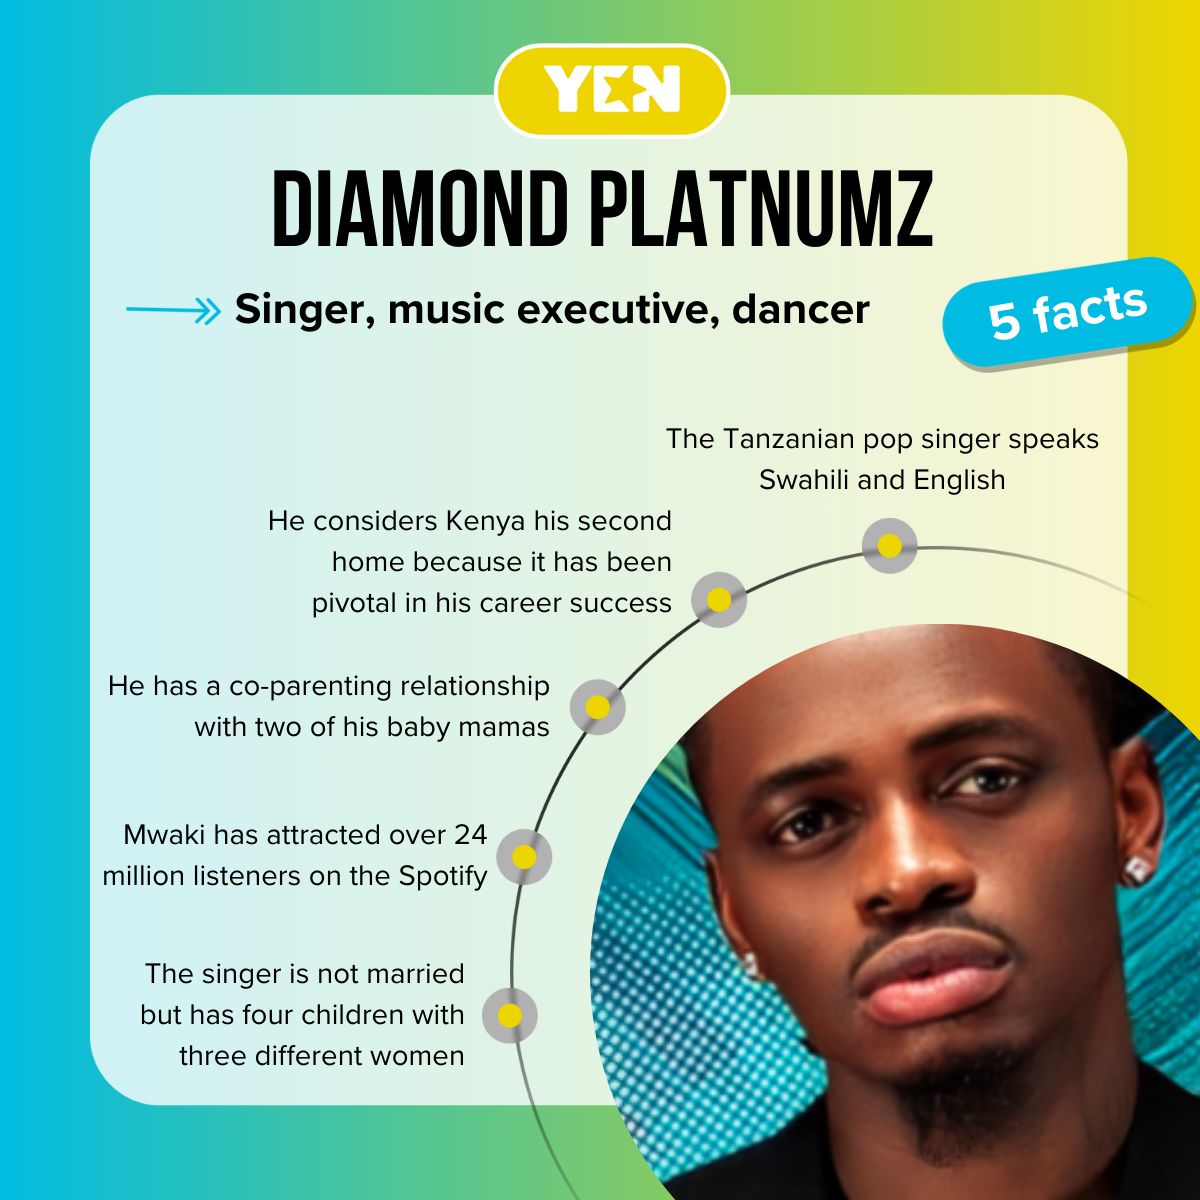 Who is Diamond Platnumz?